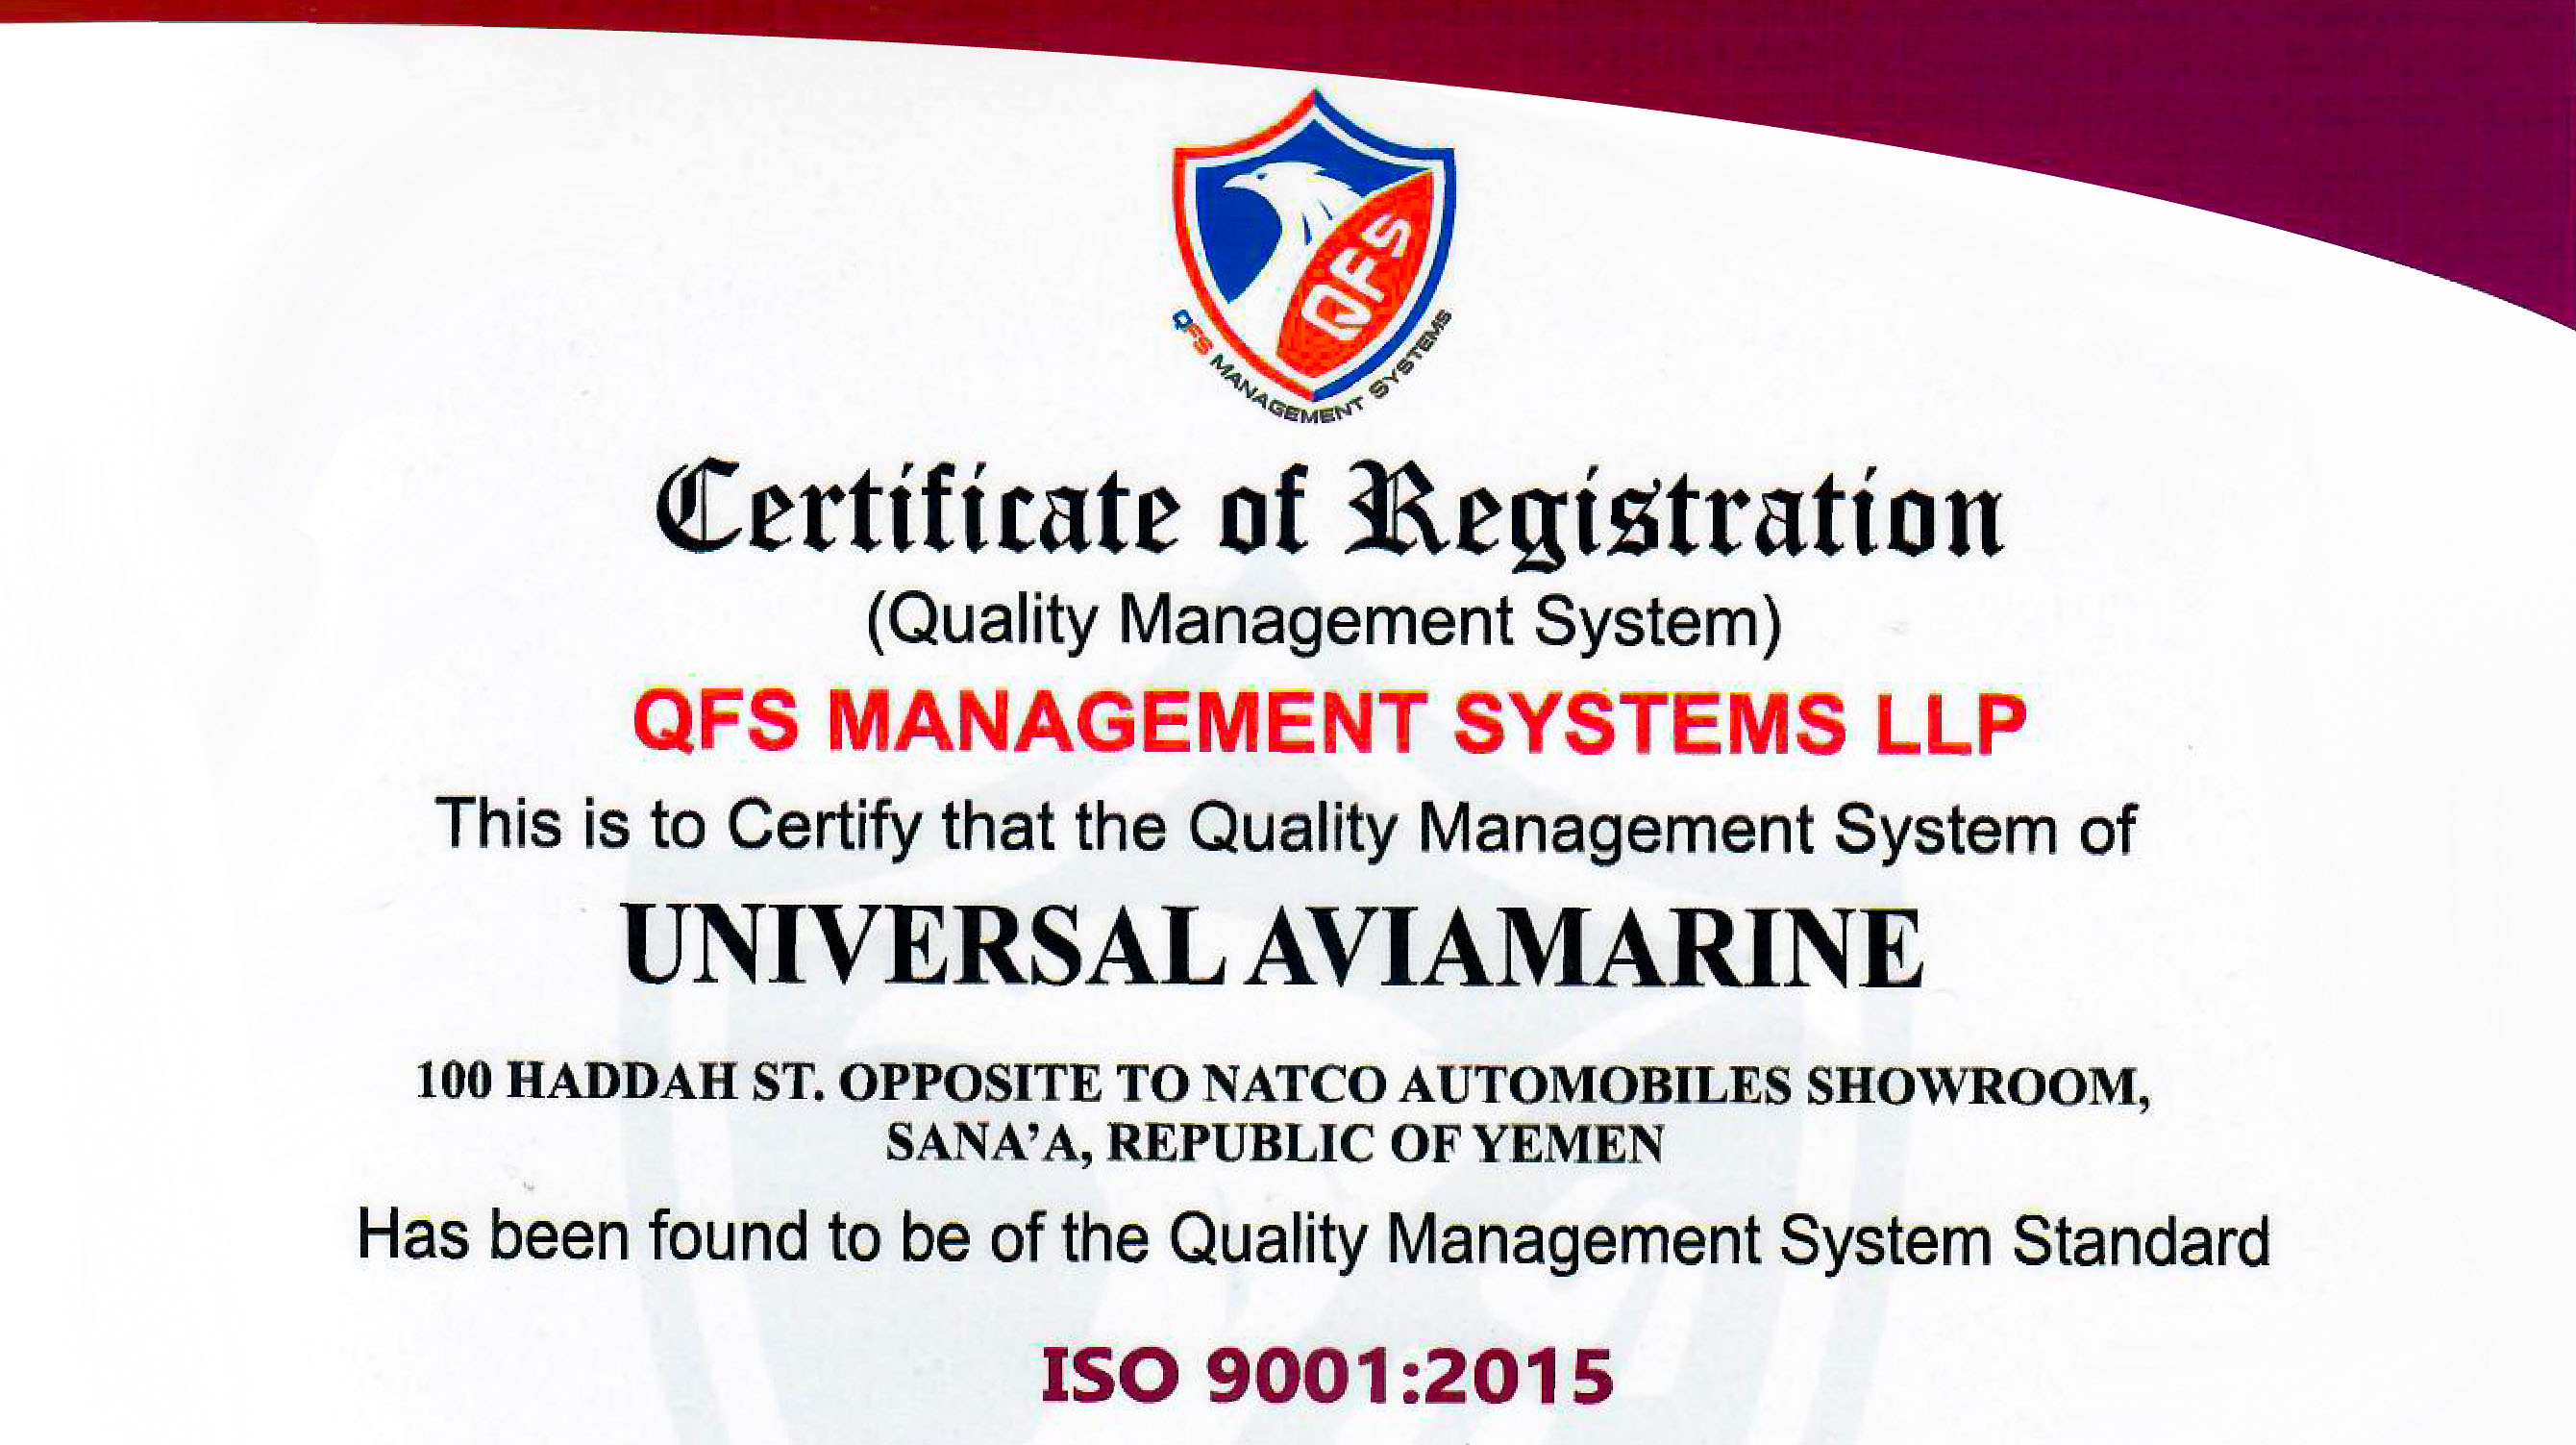  Universal Aviamarine Obtains ISO 9001:2015